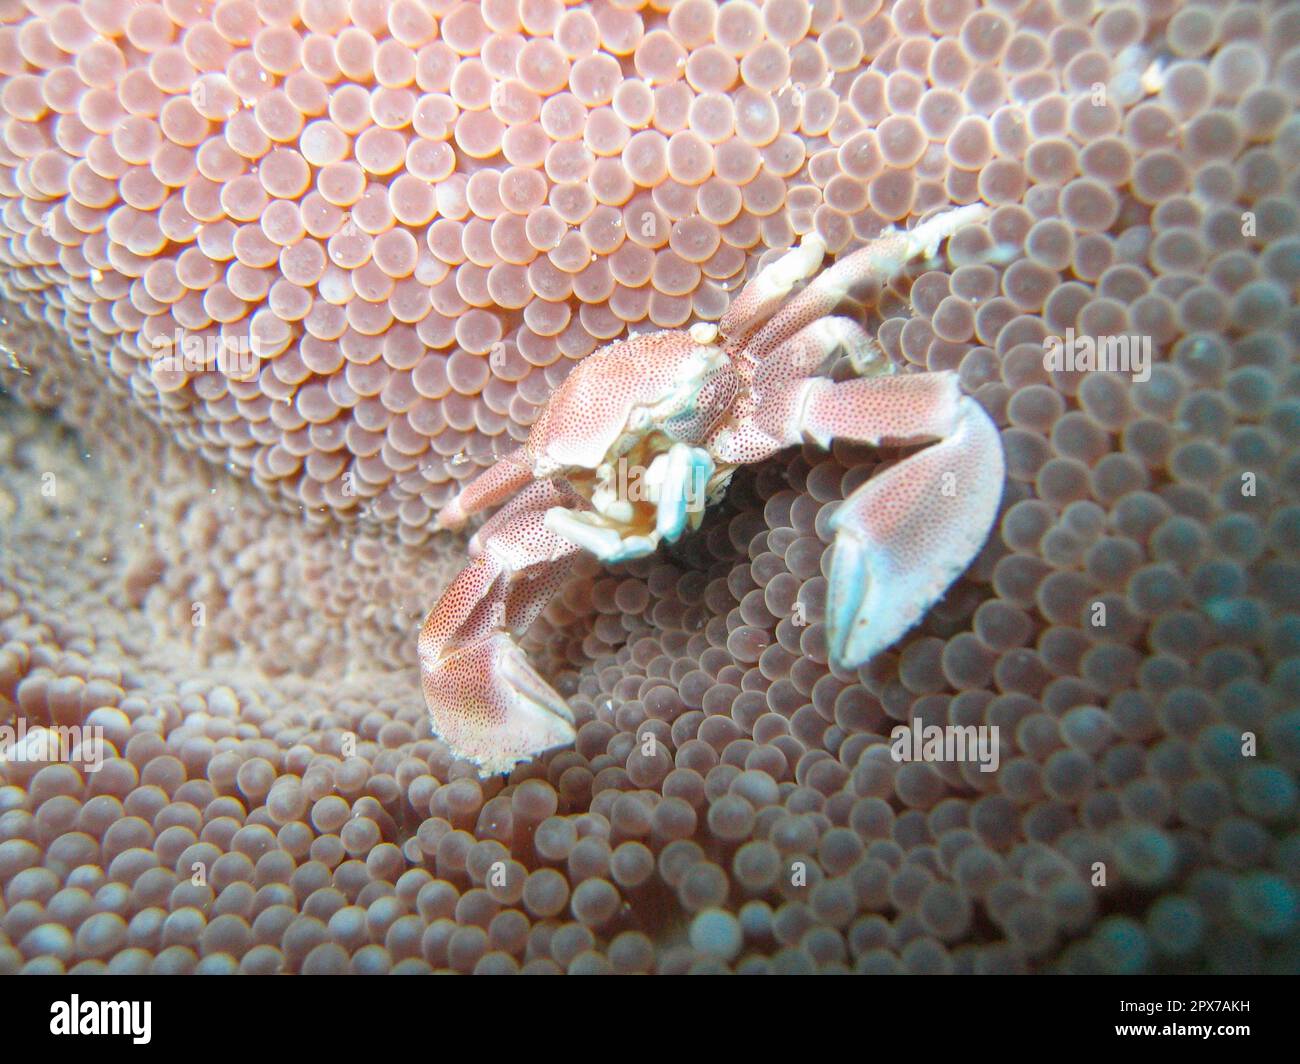 Porcelain crab on club anemone Stock Photo